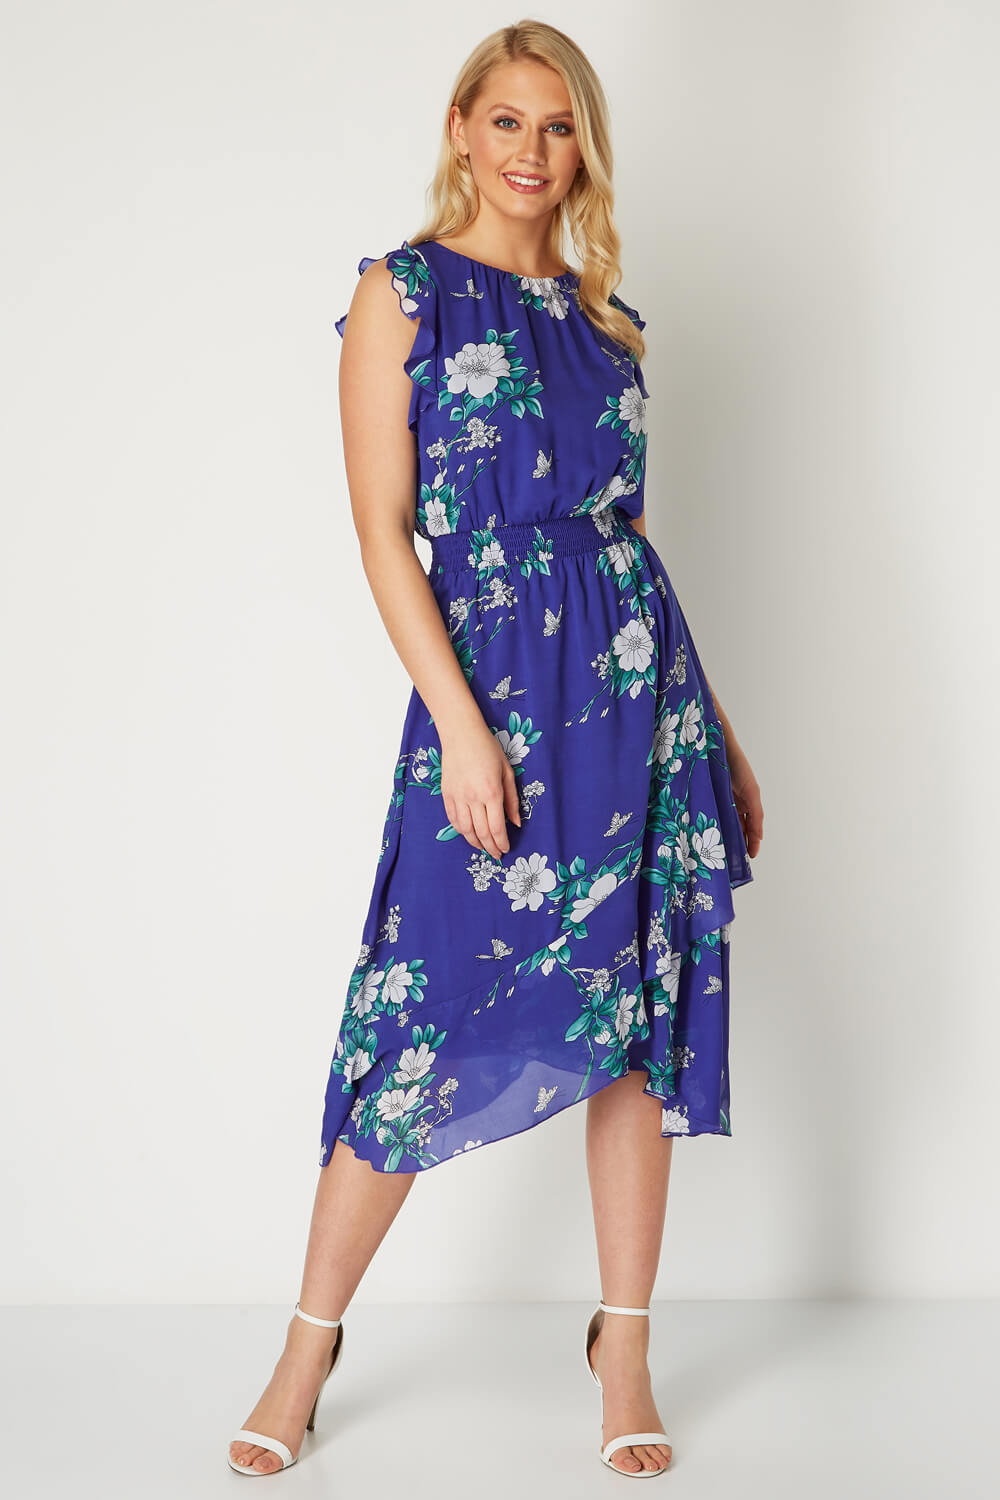 Floral Ruffle Midi Dress in Royal Blue - Roman Originals UK